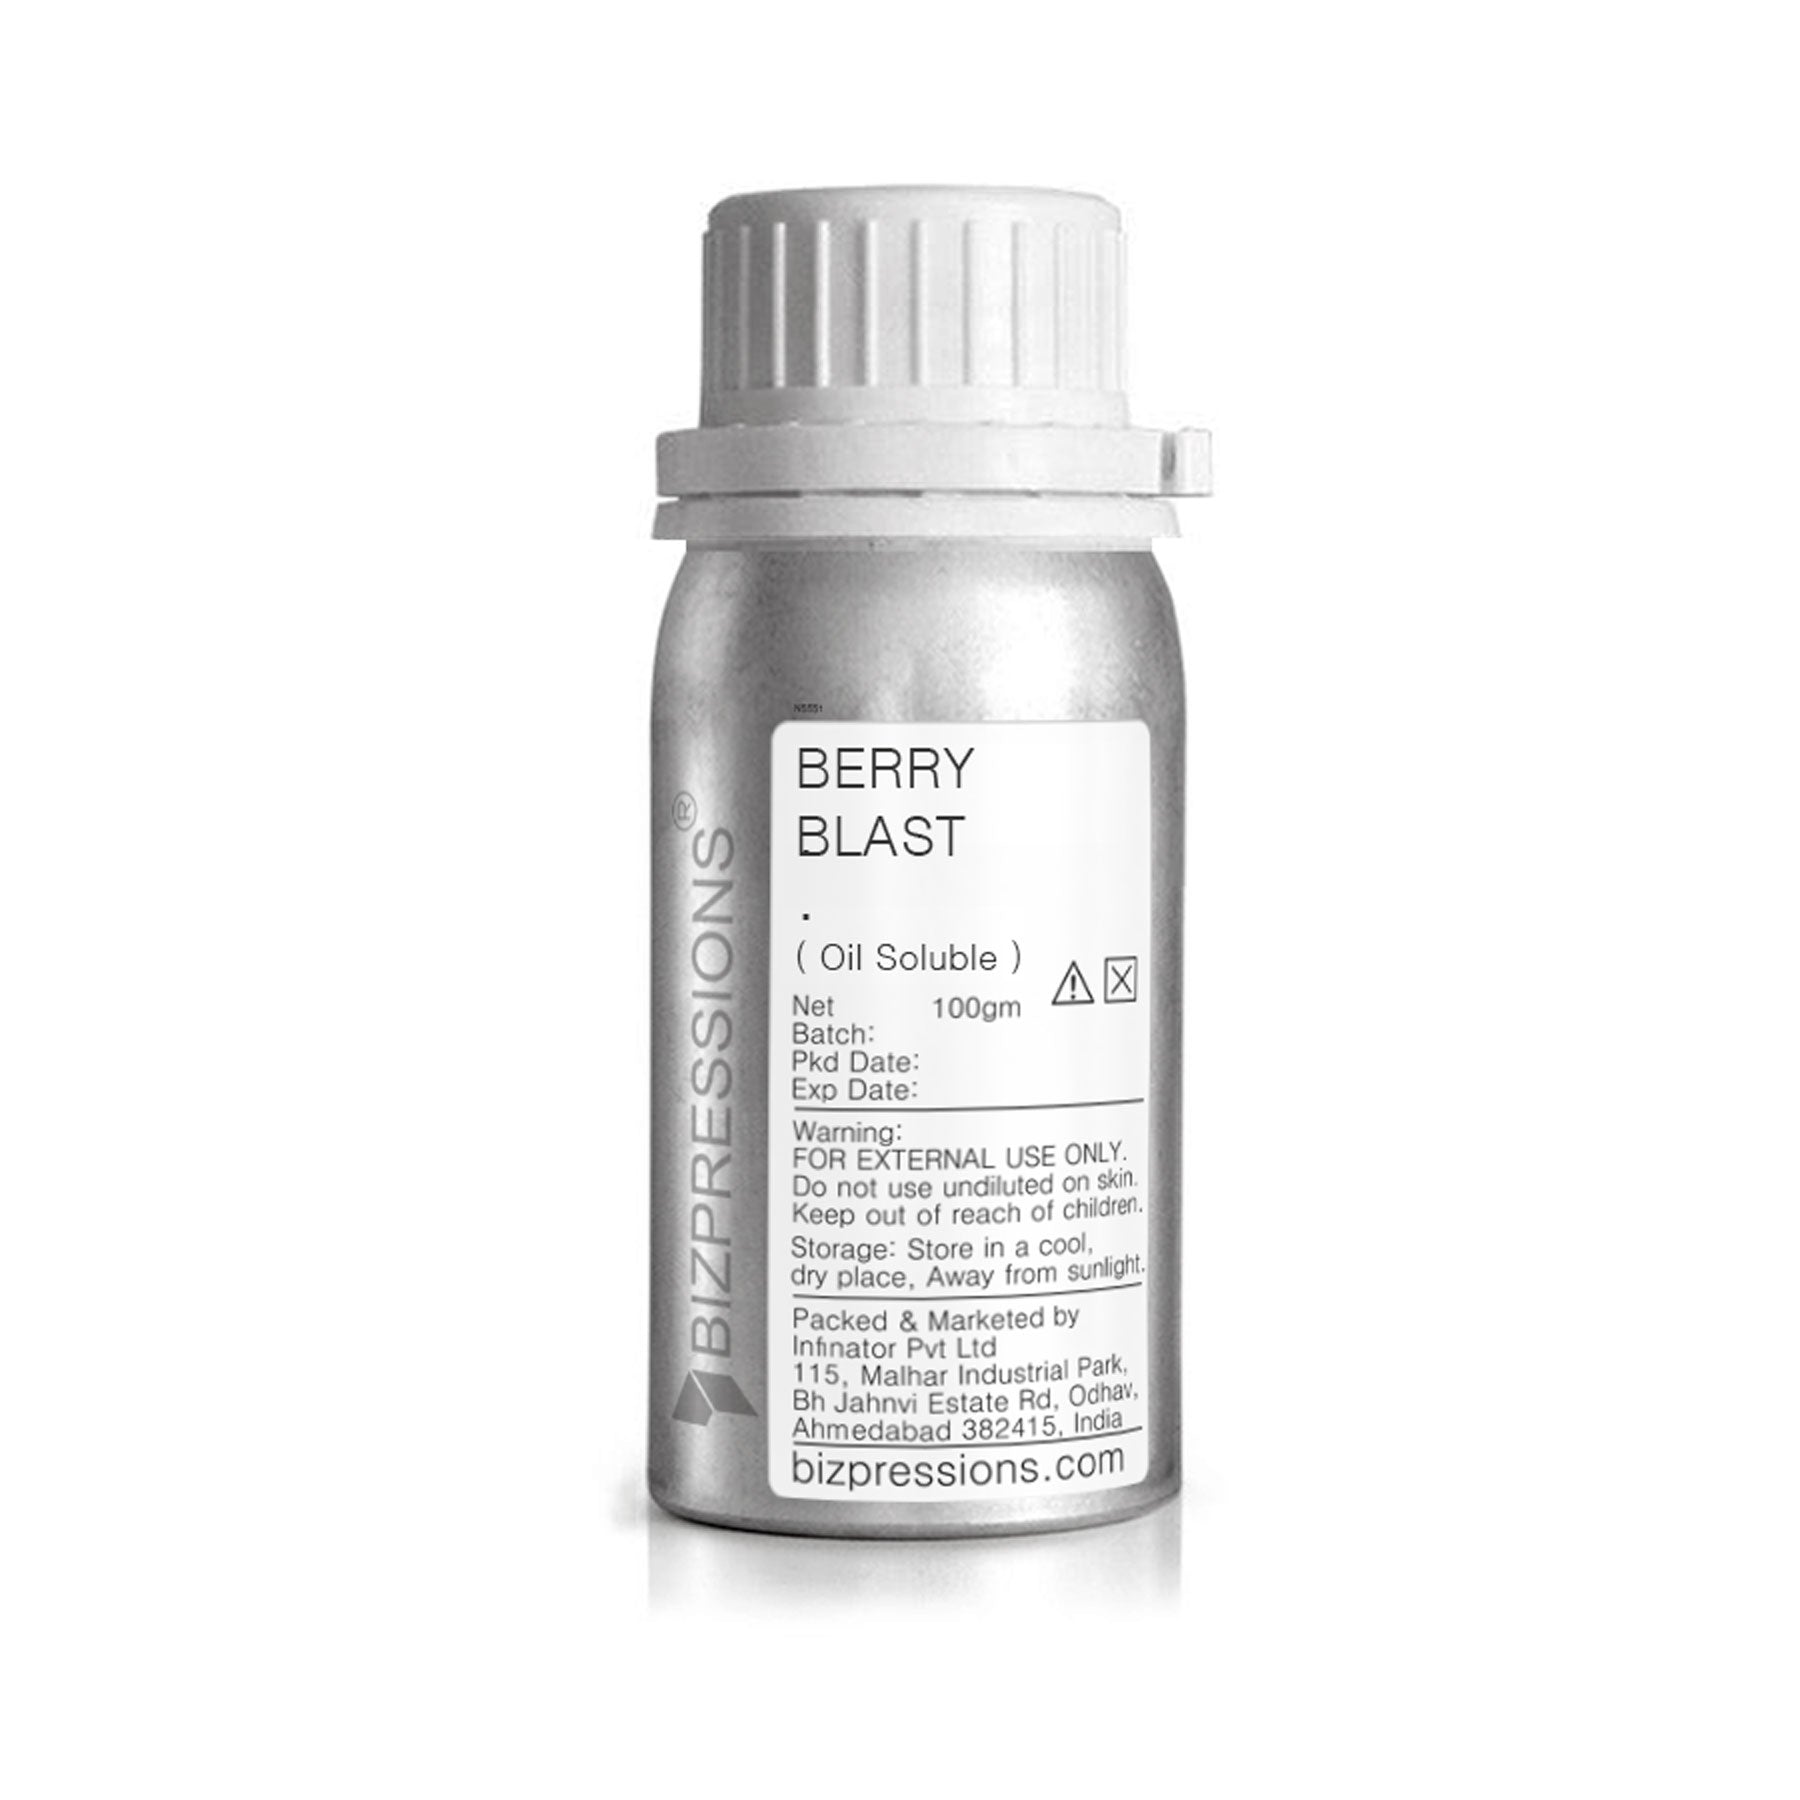 BERRY BLAST - Fragrance ( Oil Soluble ) - 100 gm